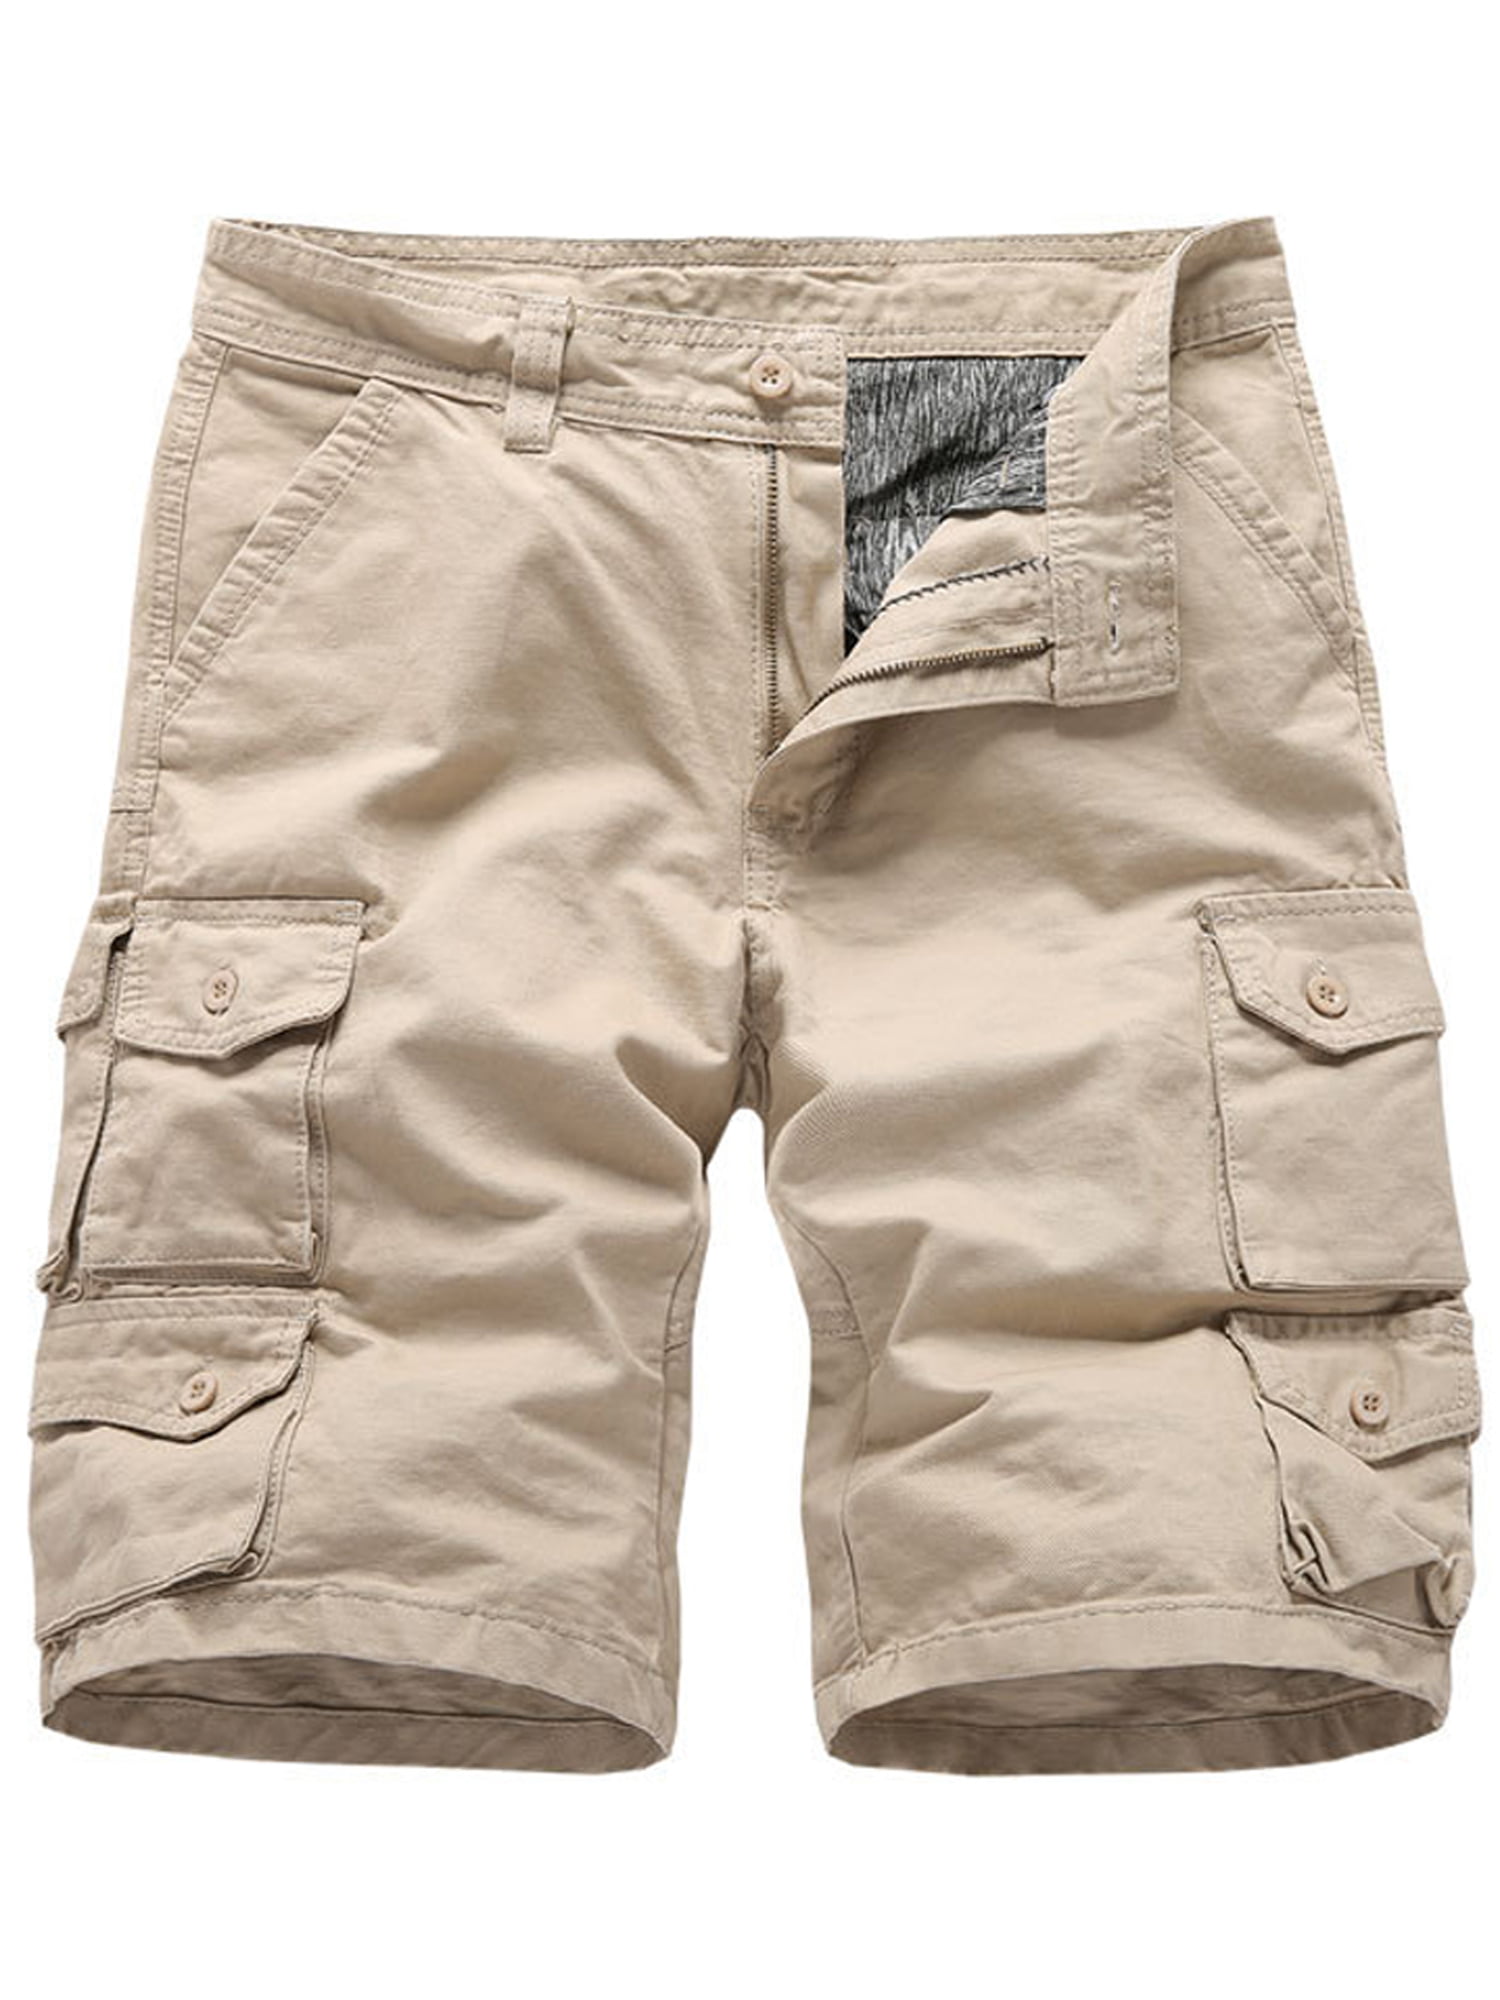 Gary Com 100% Cotton Twill Mens Cargo Short with Waist Belt 6 Pockets Work Dungarees Stretch Regular Fit Basics Short Pants Beige 32